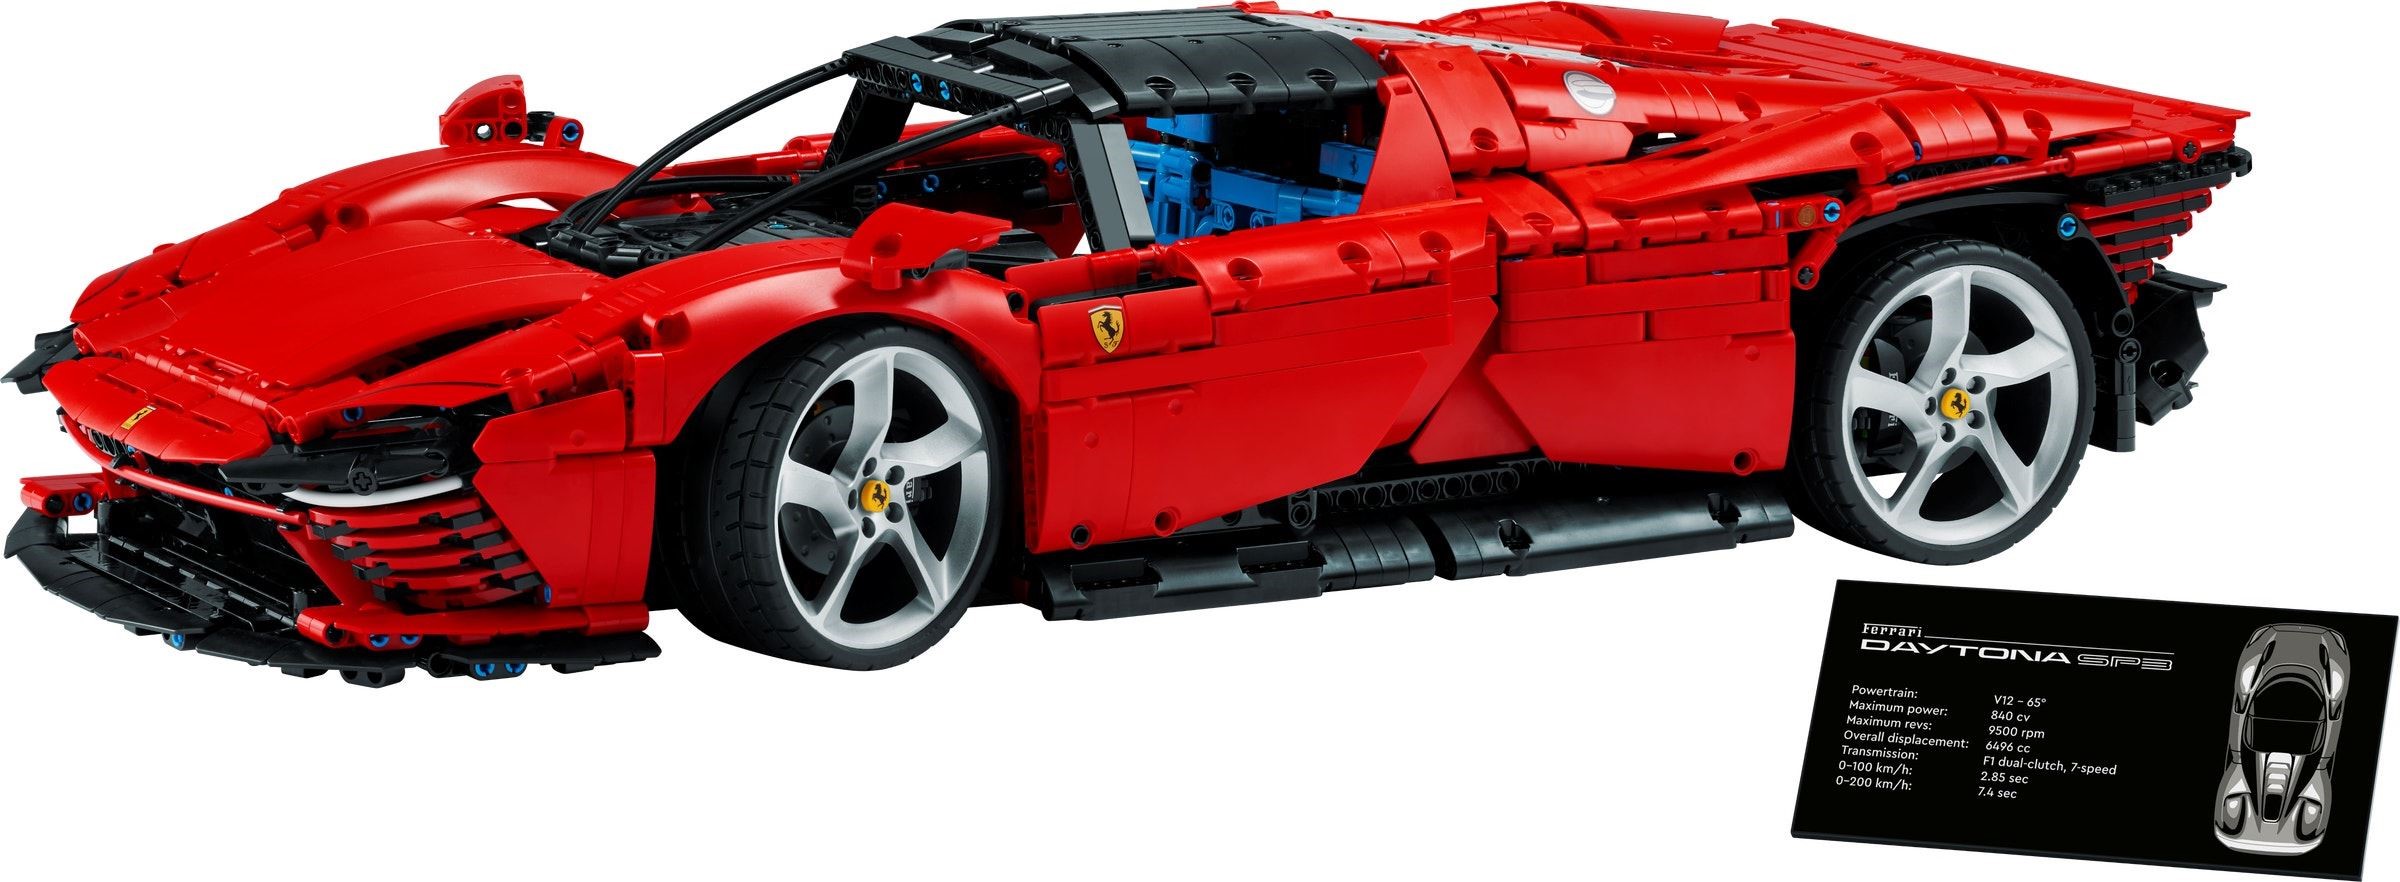 Bricker - Construction Toy by LEGO 42143 Ferrari Daytona SP3